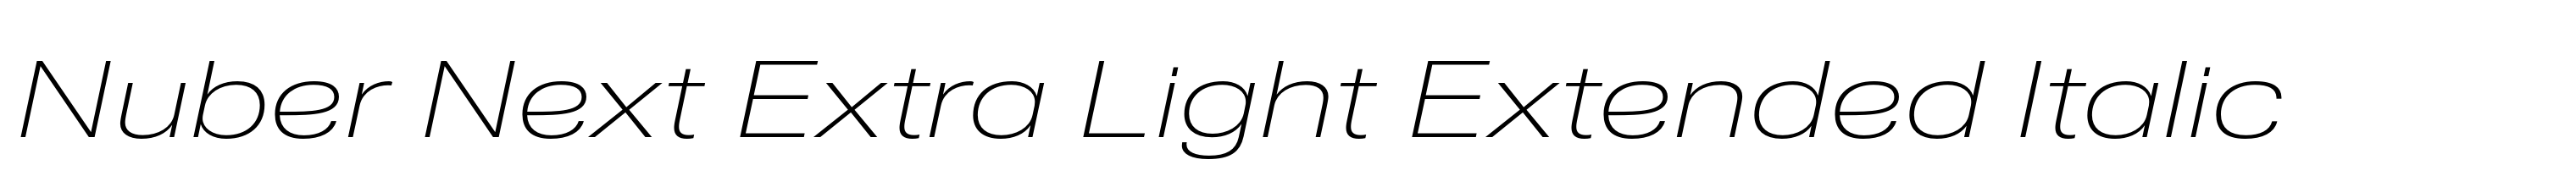 Nuber Next Extra Light Extended Italic